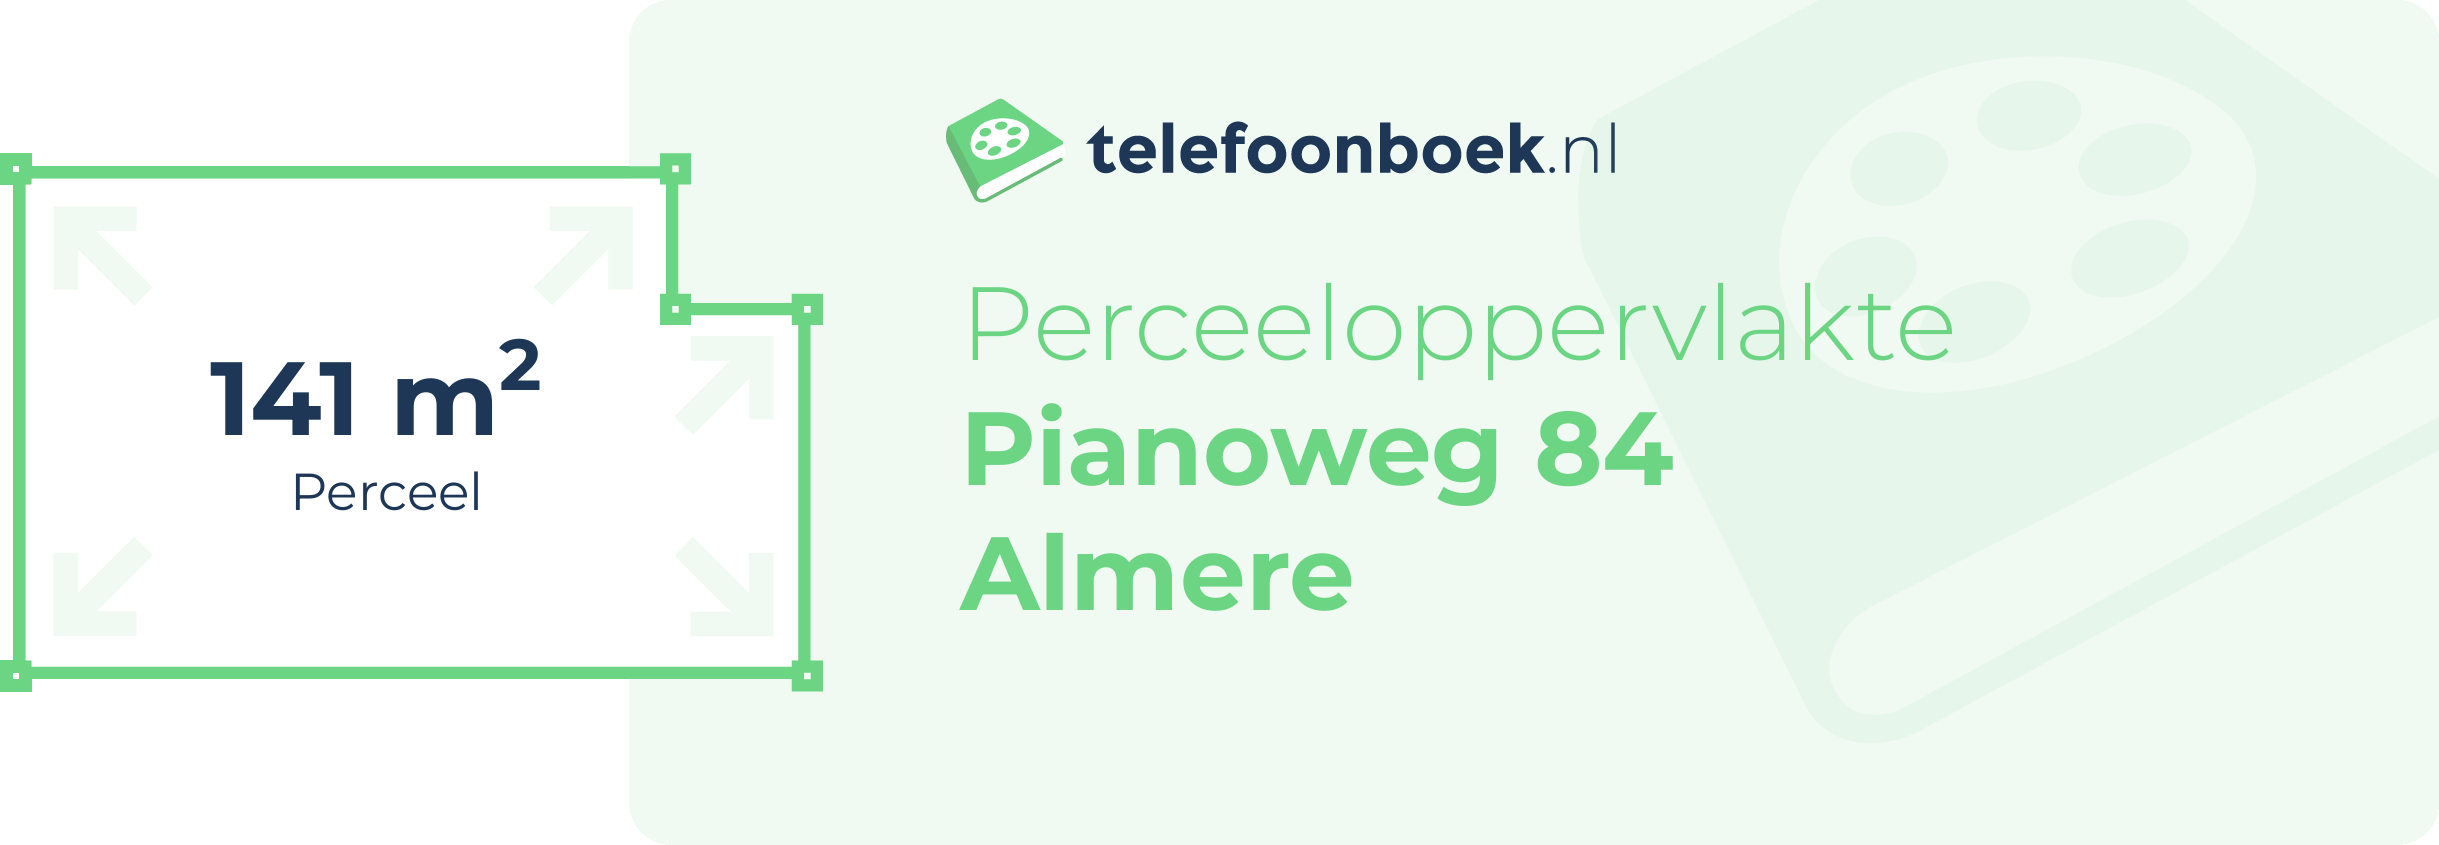 Perceeloppervlakte Pianoweg 84 Almere